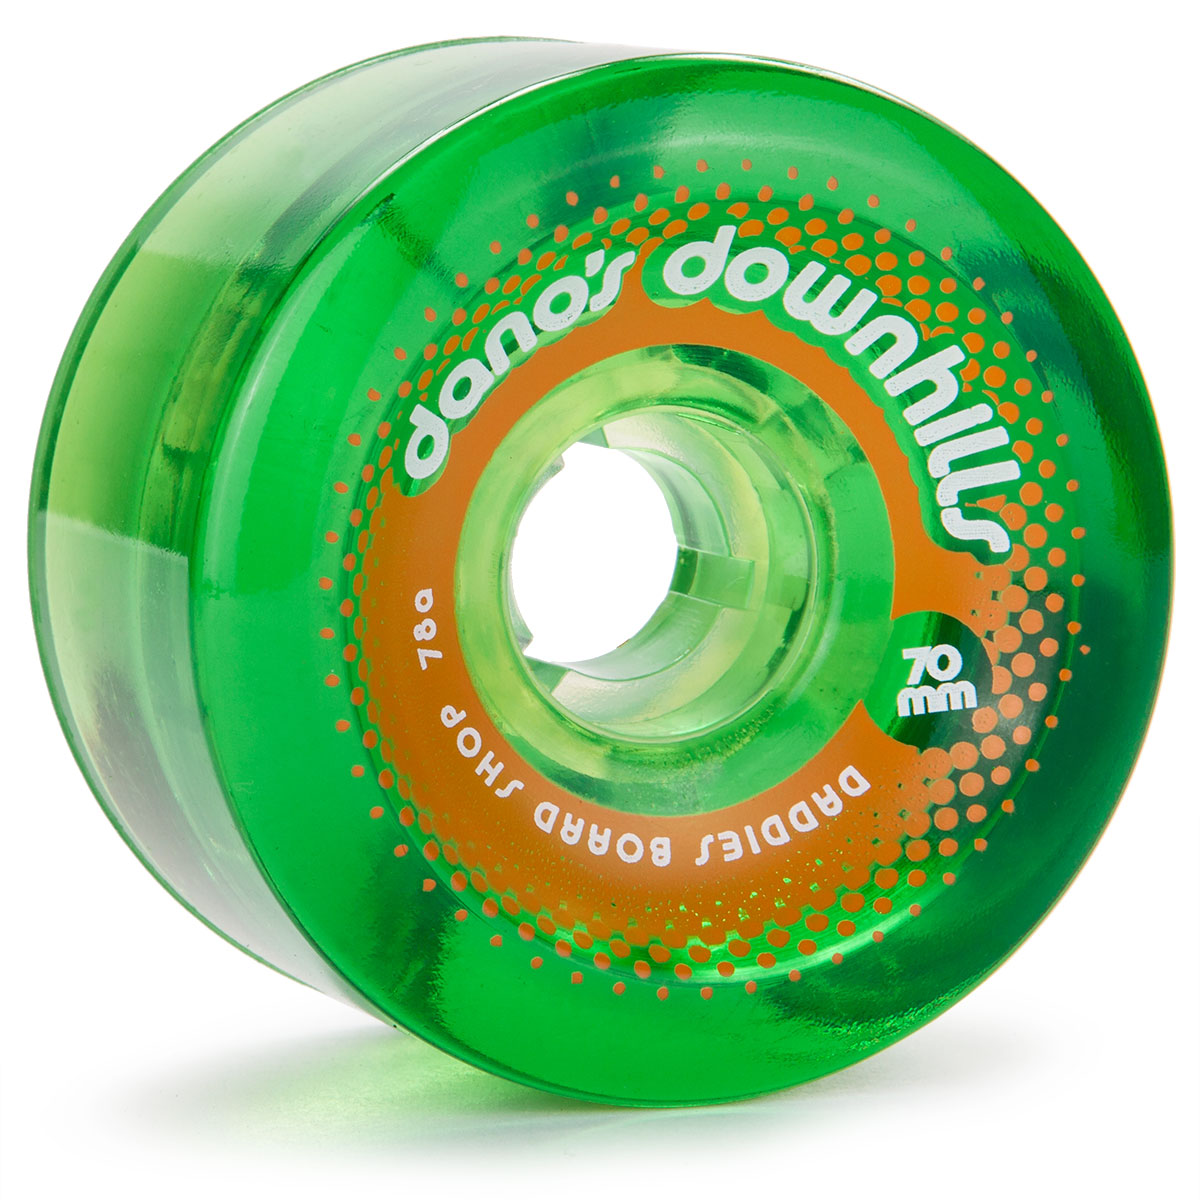 Dano's Downhills Longboard Wheels 70mm - 78a Green – CCS